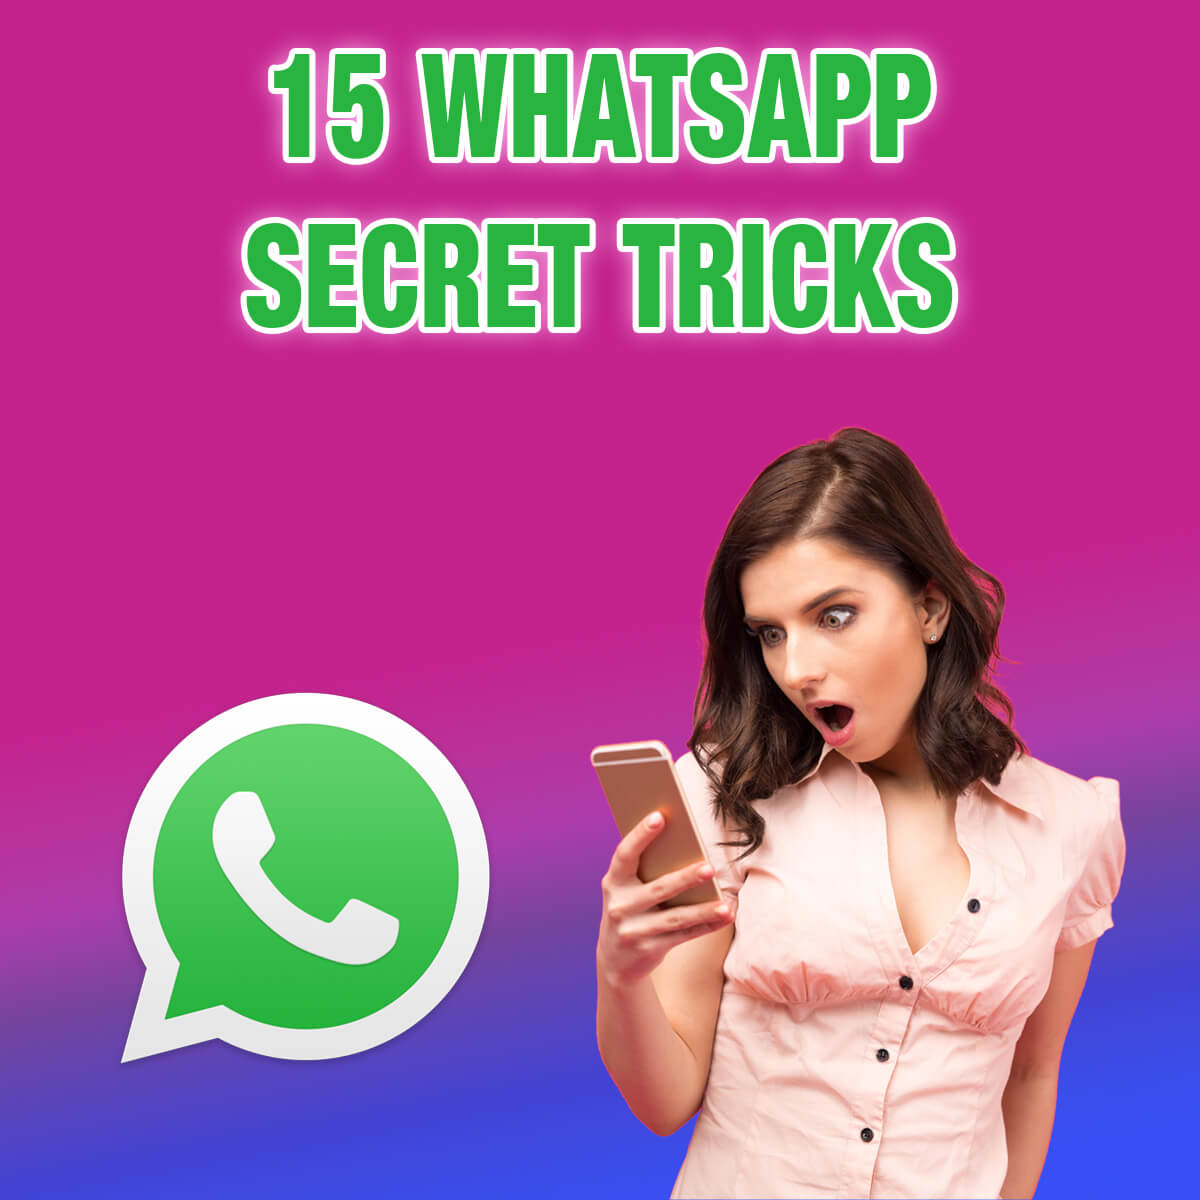 15 WhatsApp Secret Tricks